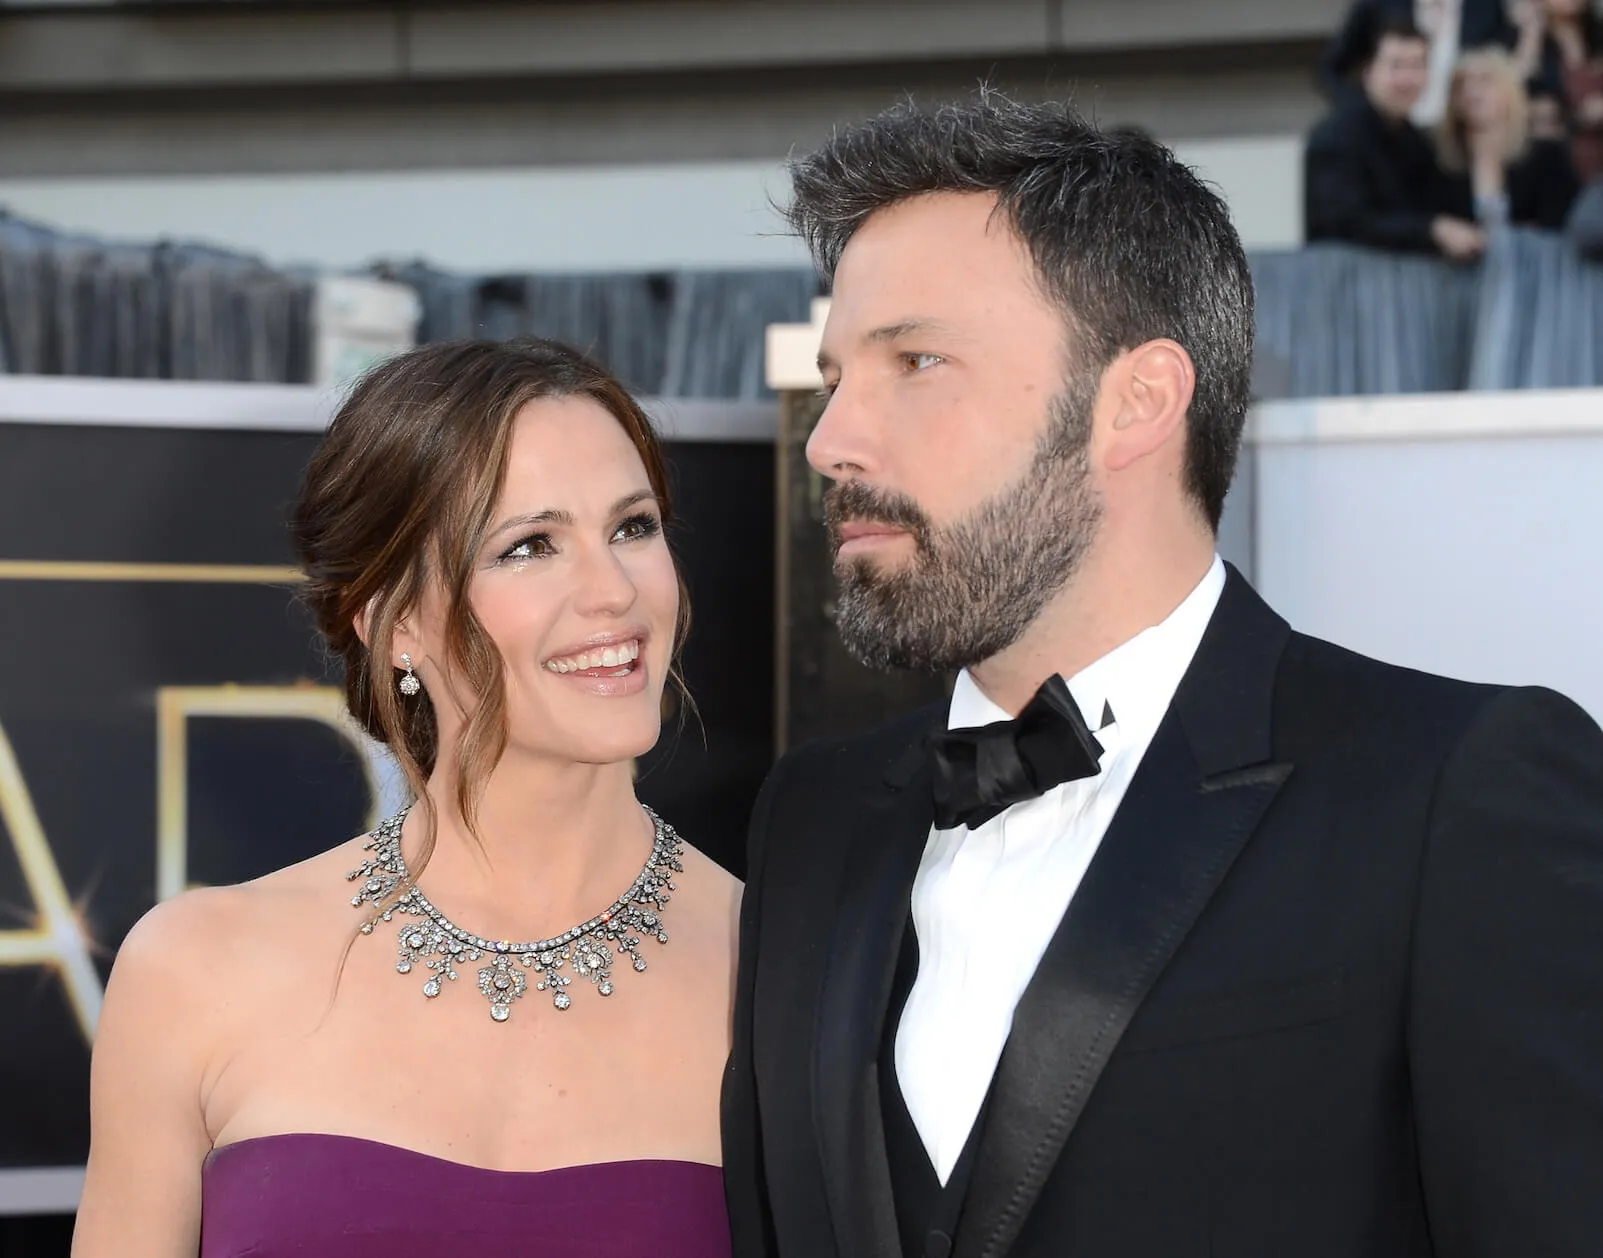 Jennifer Garner looking up at Ben Affleck at the Academy Awards in 2013